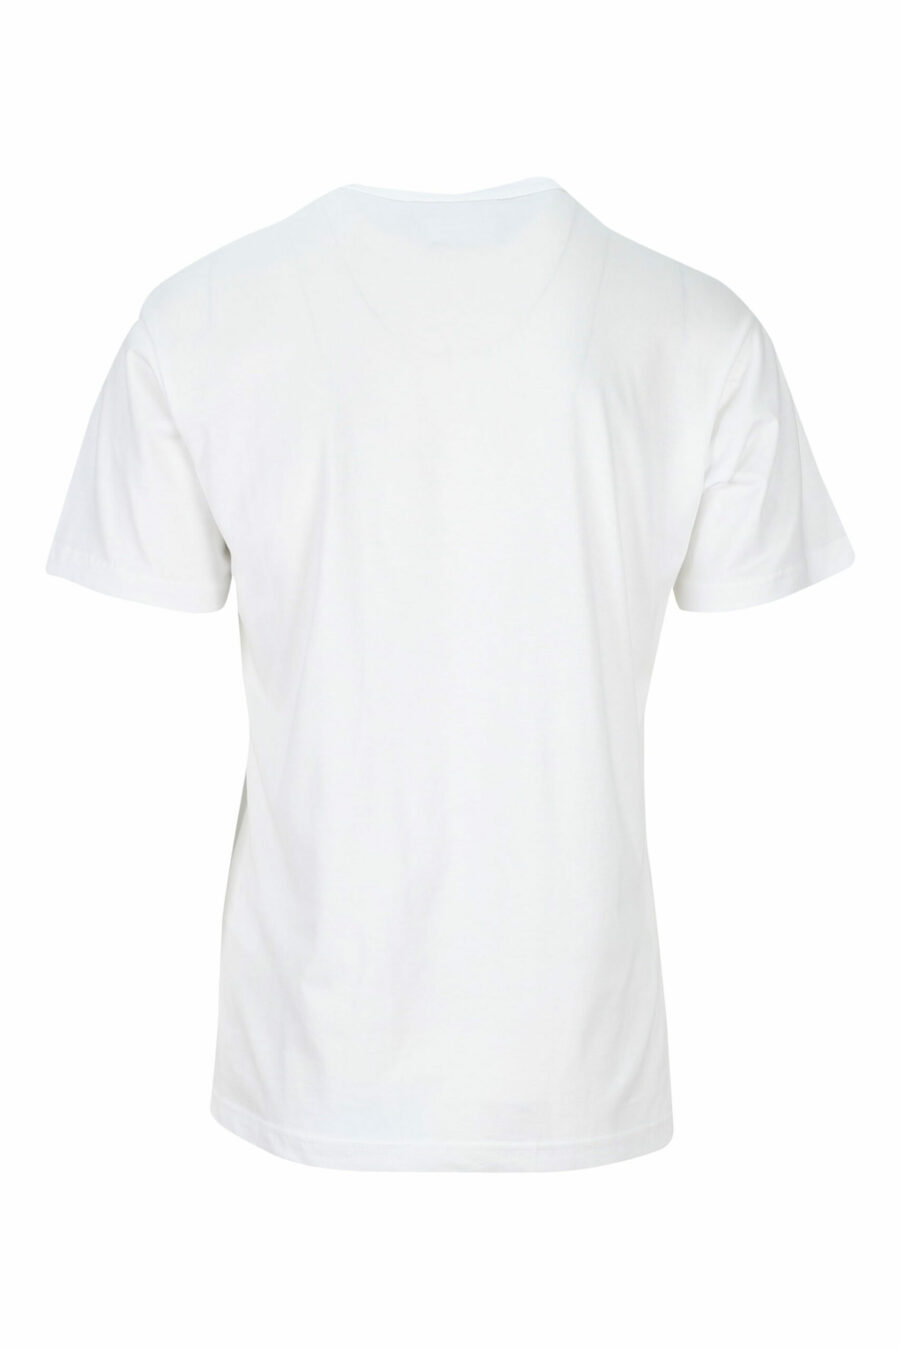 Camiseta blanca con maxilogo "piece number" negro - 8052019468663 1 scaled